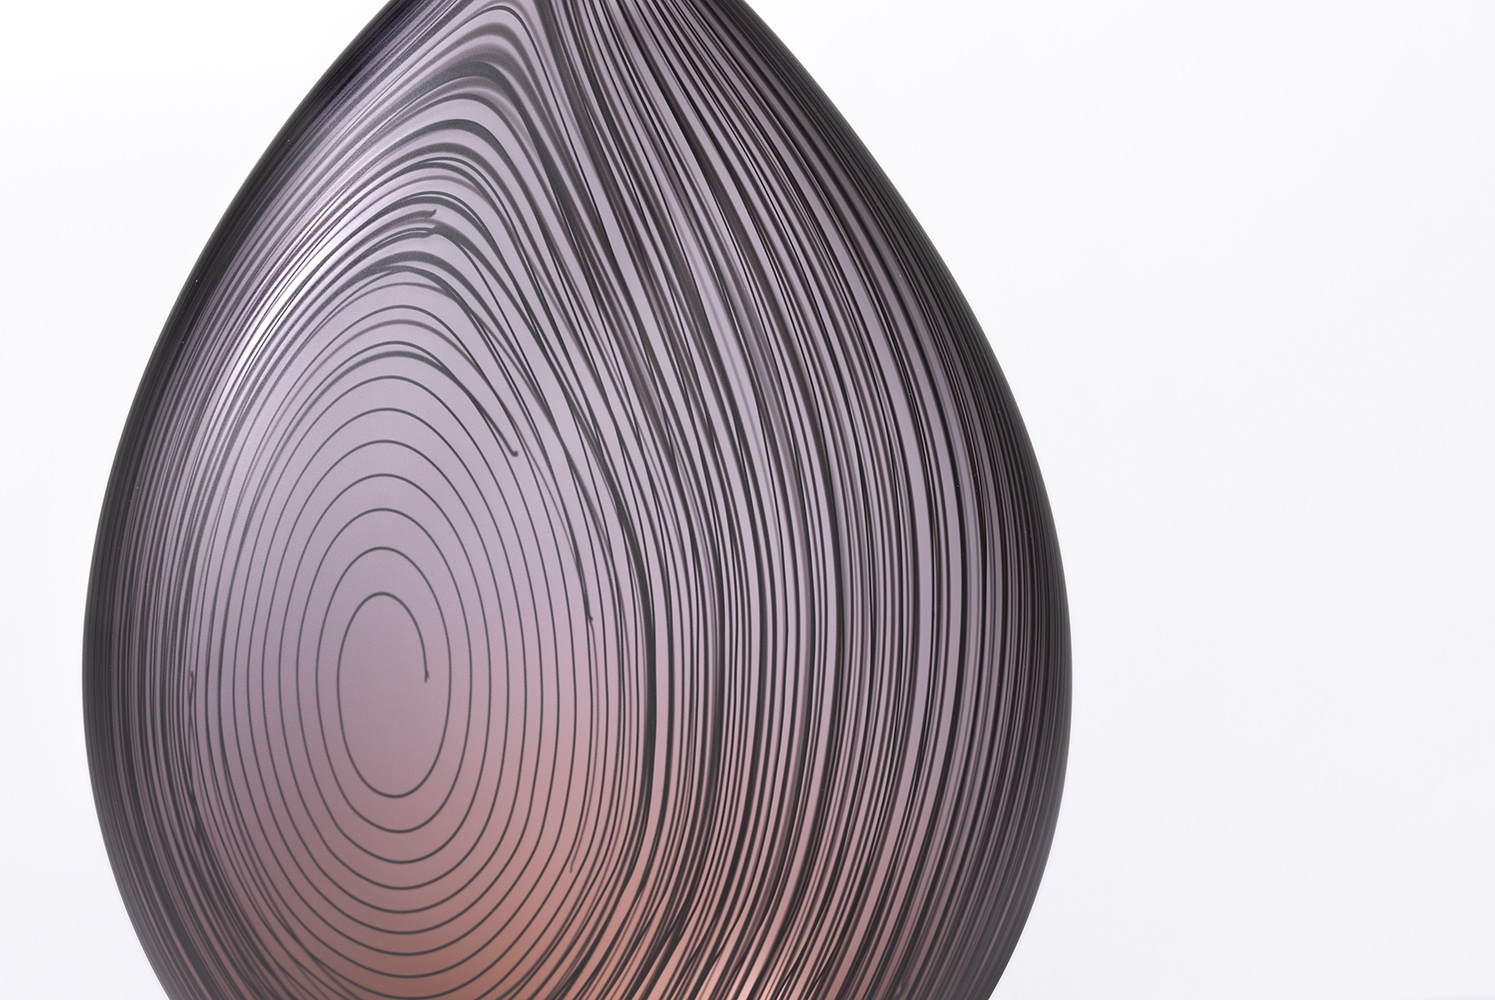 Detail of Glass Sculpture with Black Spiral Design